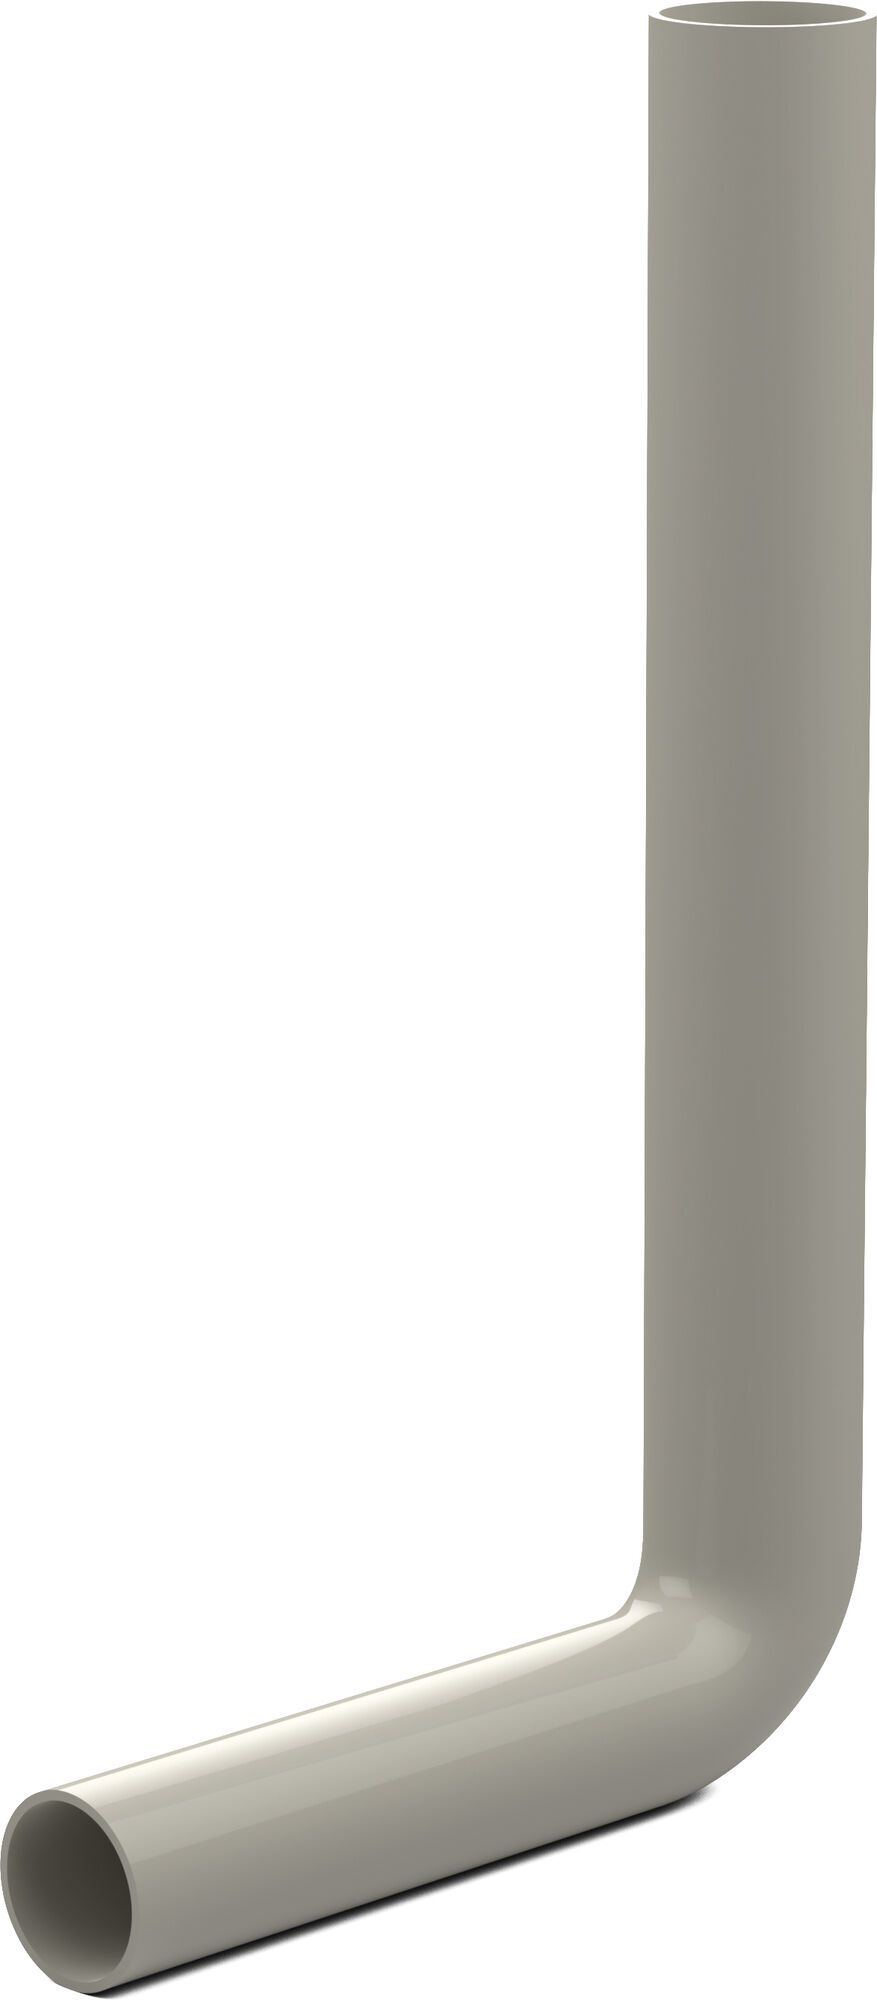 KOLANO SPUSTOWE 380 x 210 mm, pergamon